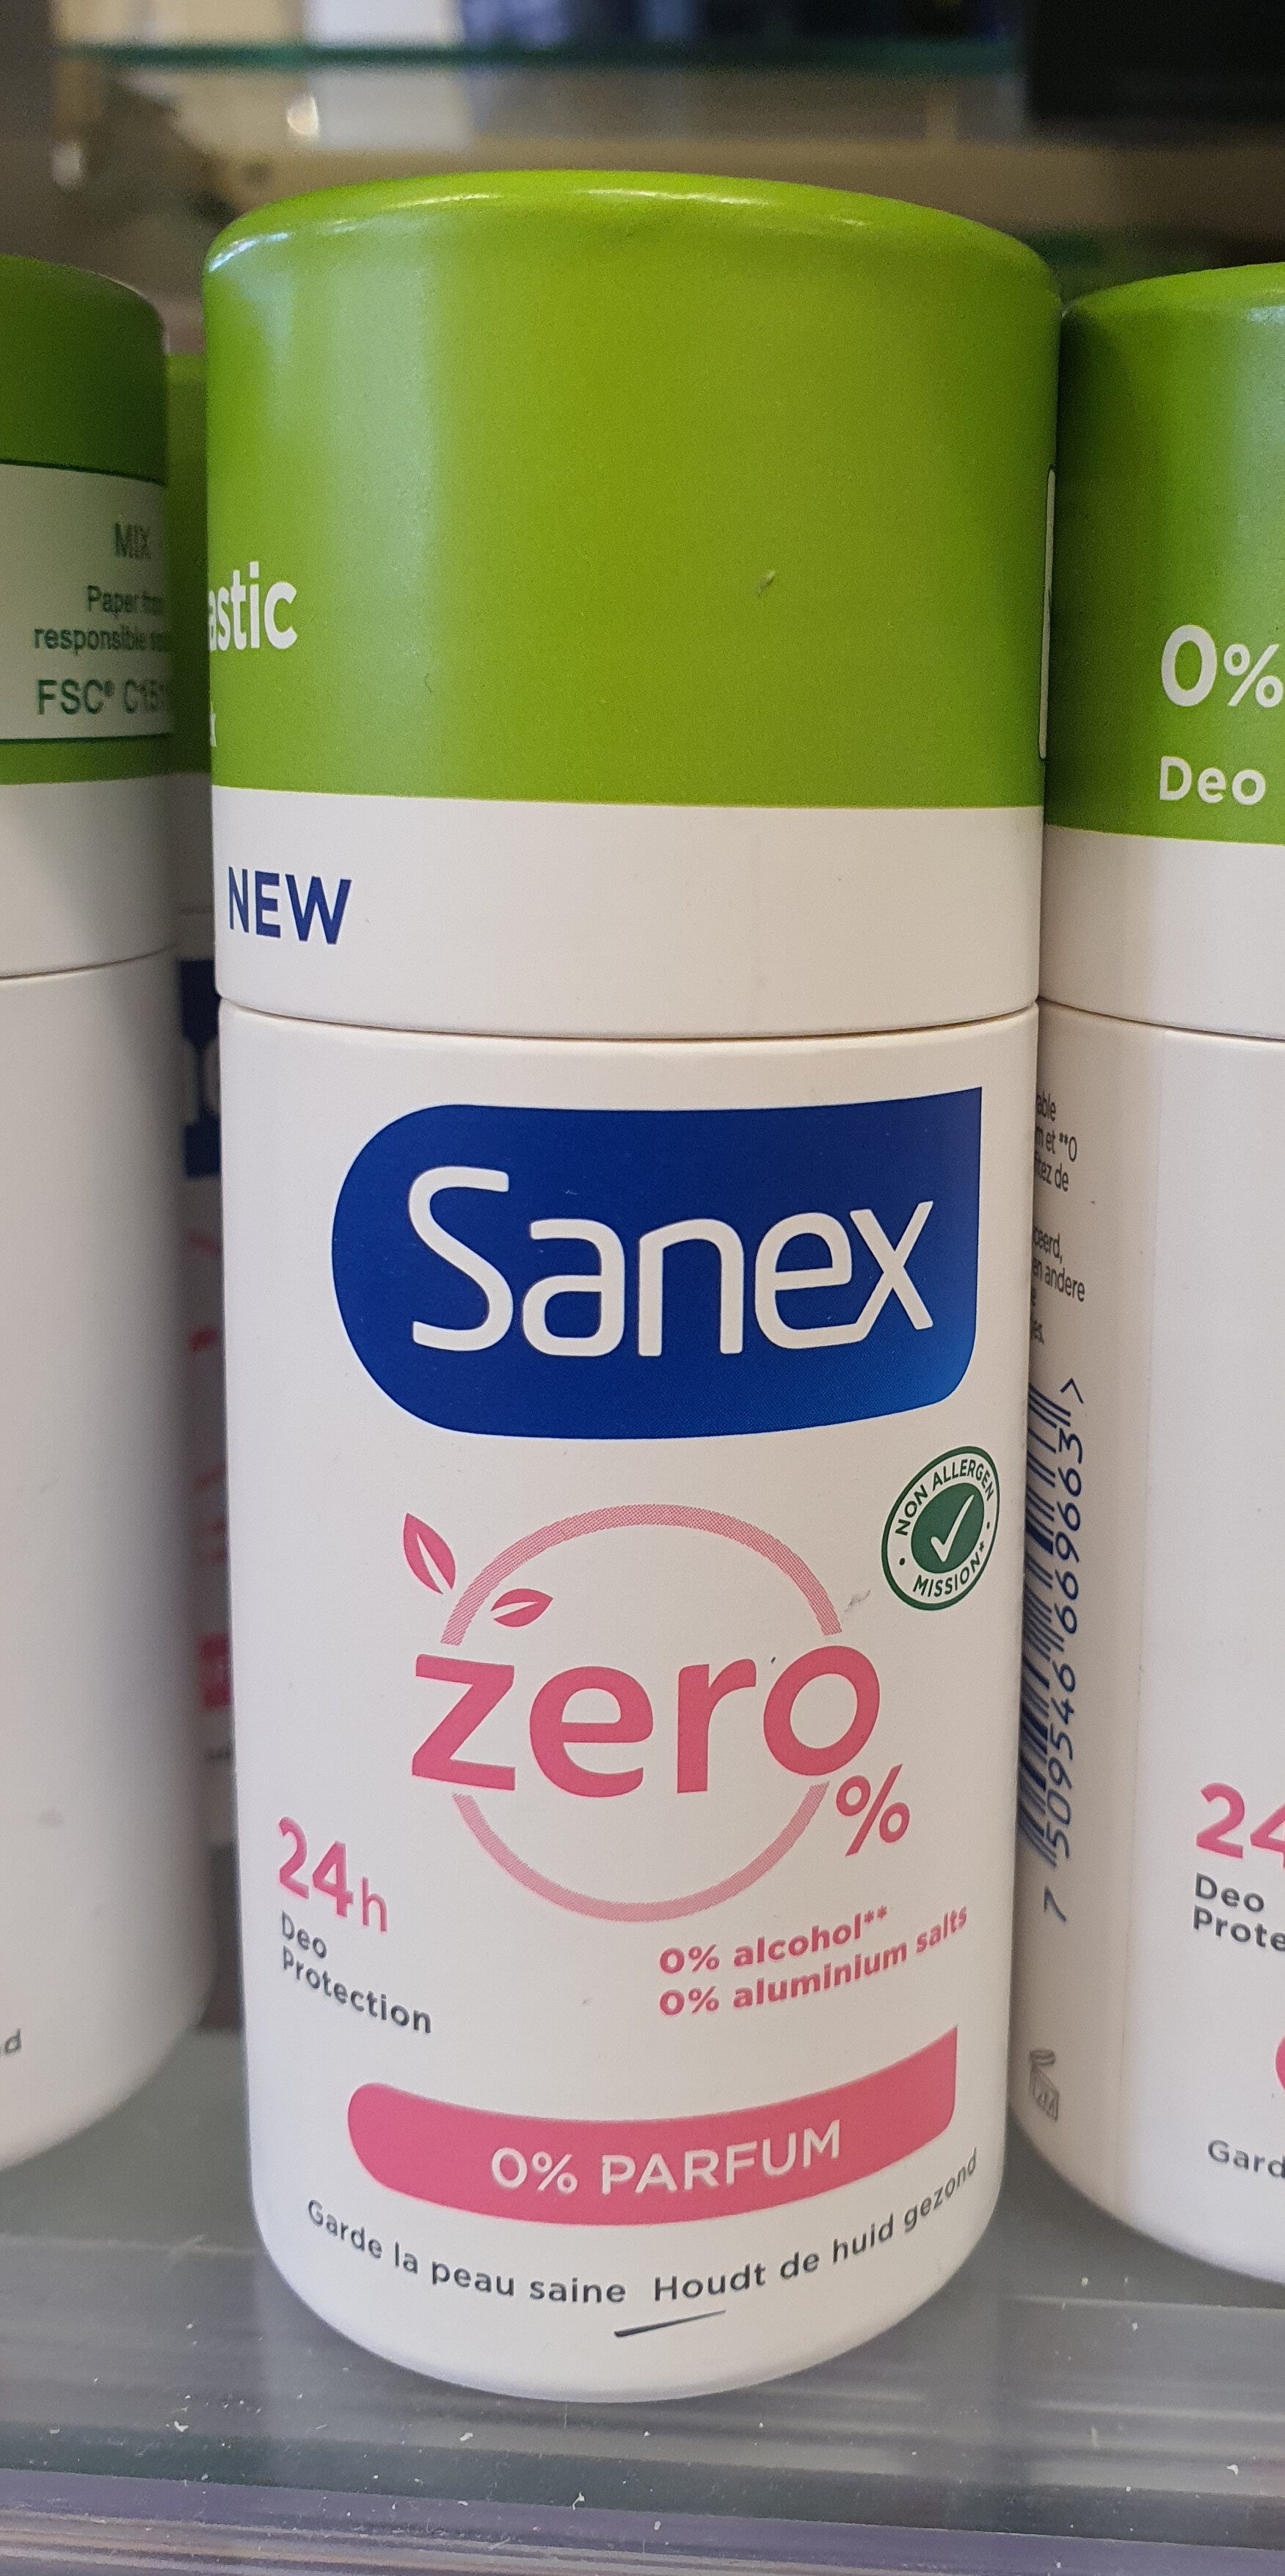 Sanex zéro% 24h - Product - fr